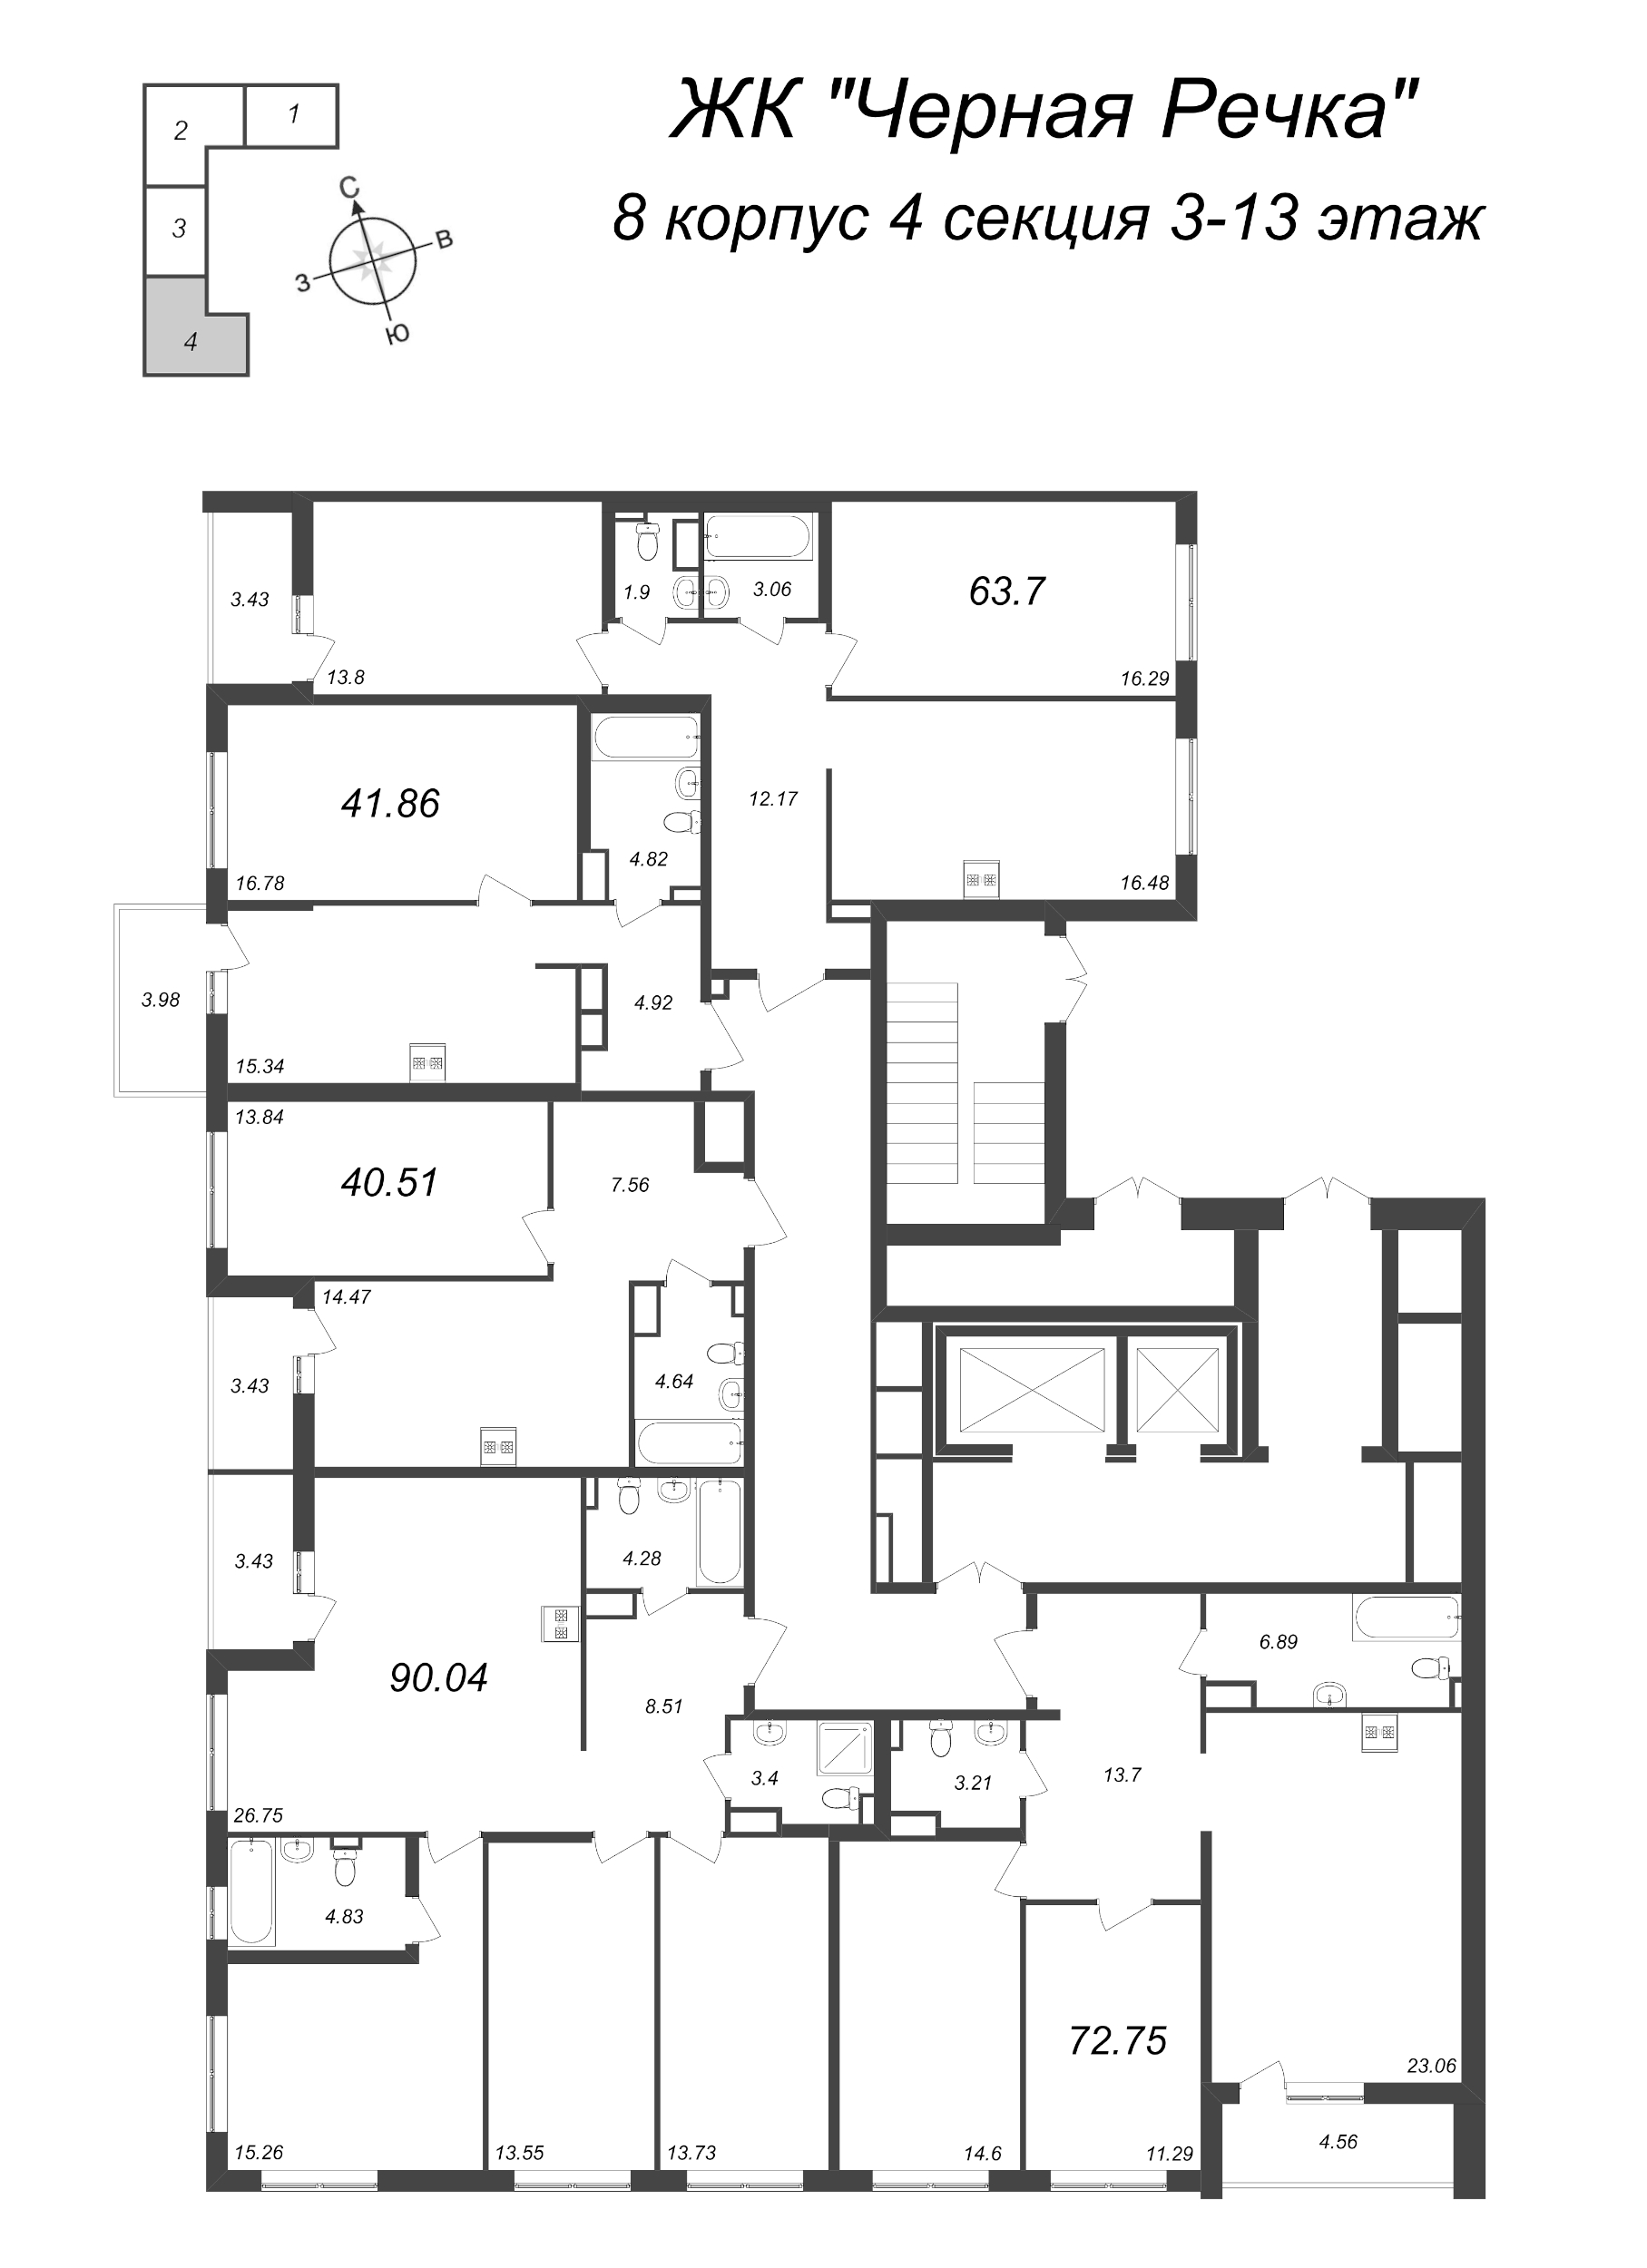 3-комнатная (Евро) квартира, 72.75 м² - планировка этажа